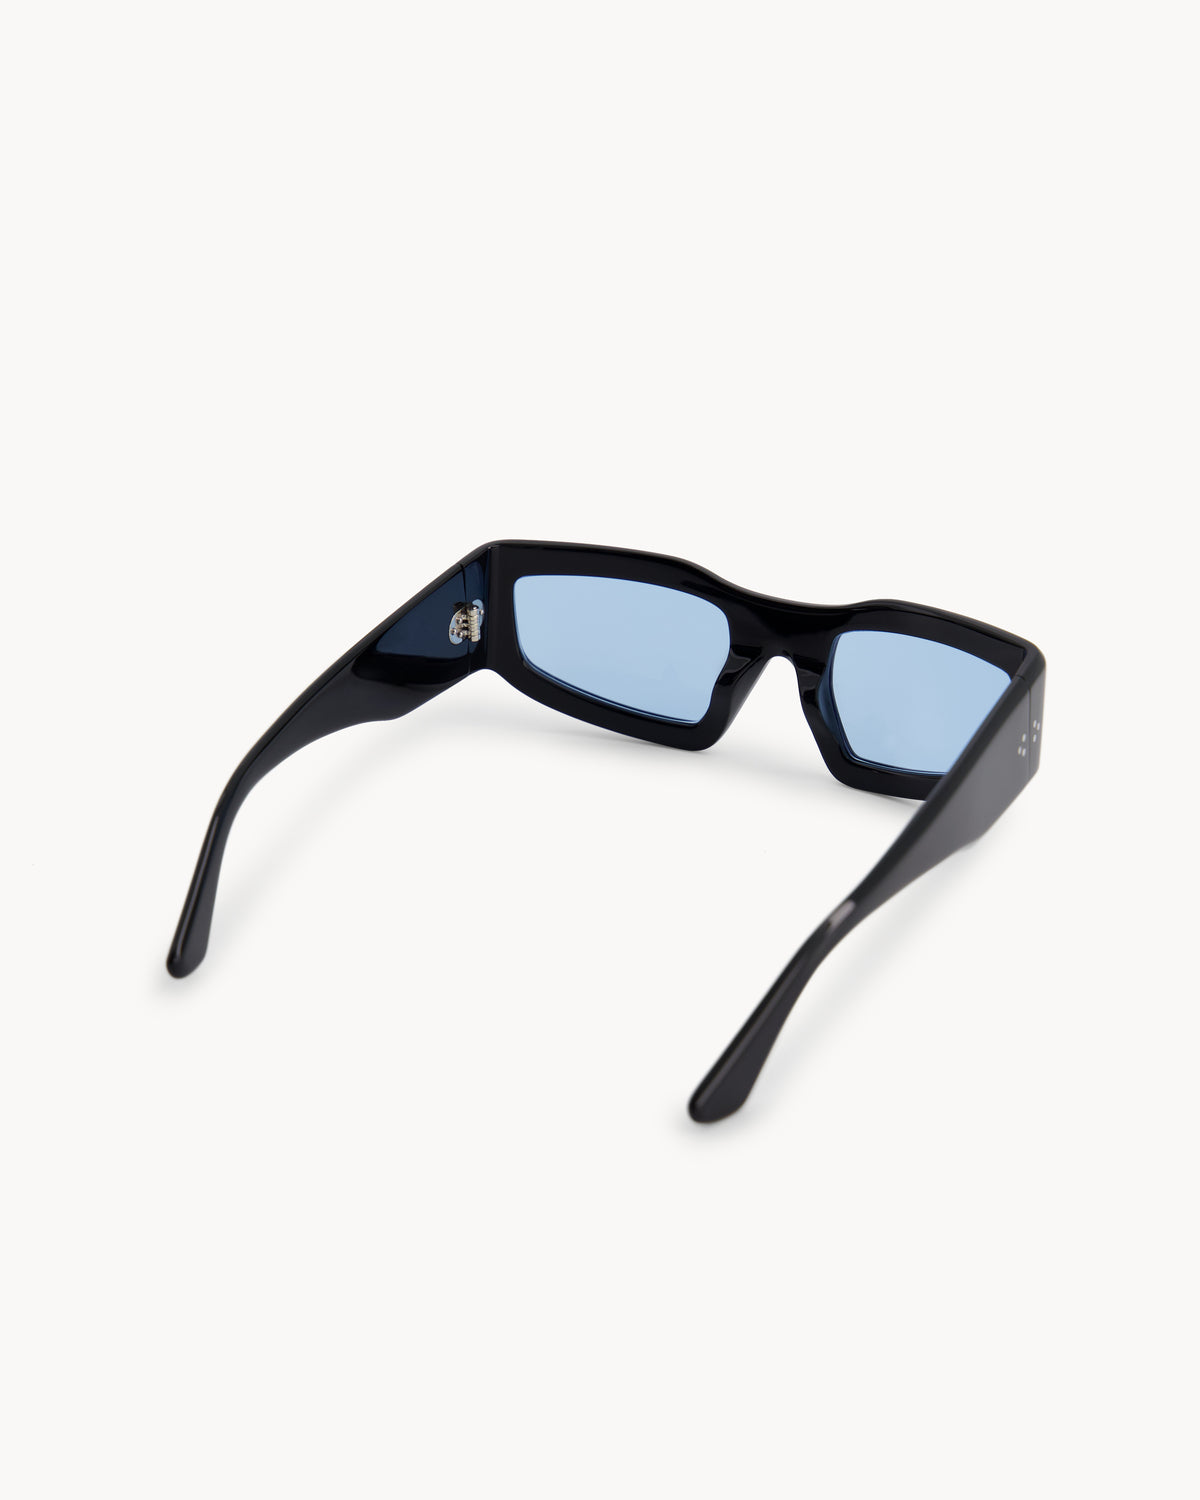 Port Tanger Andalucia Sunglasses in Black Acetate and Rif Blue Lenses 3